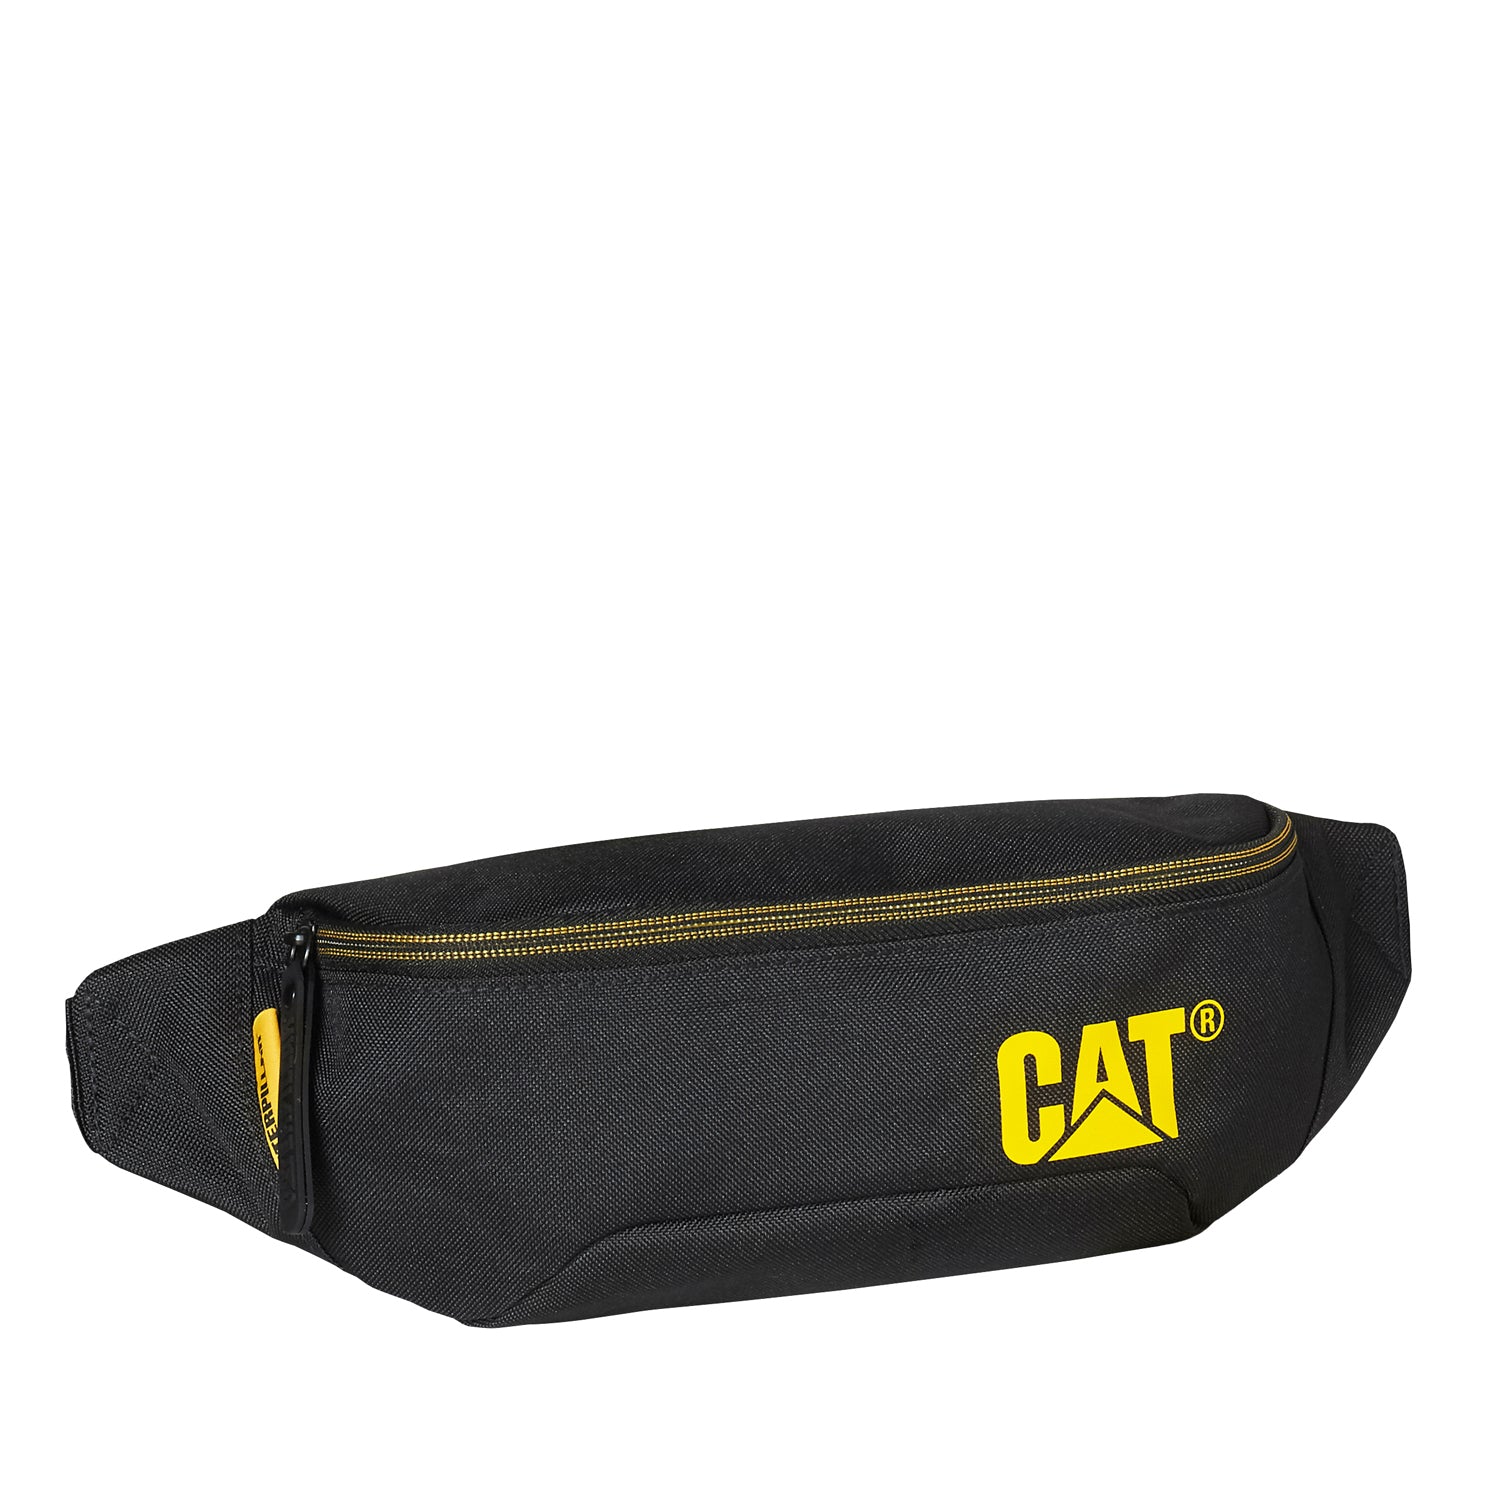 CAT - 83615-01 PROJECT waist bag - Black-1